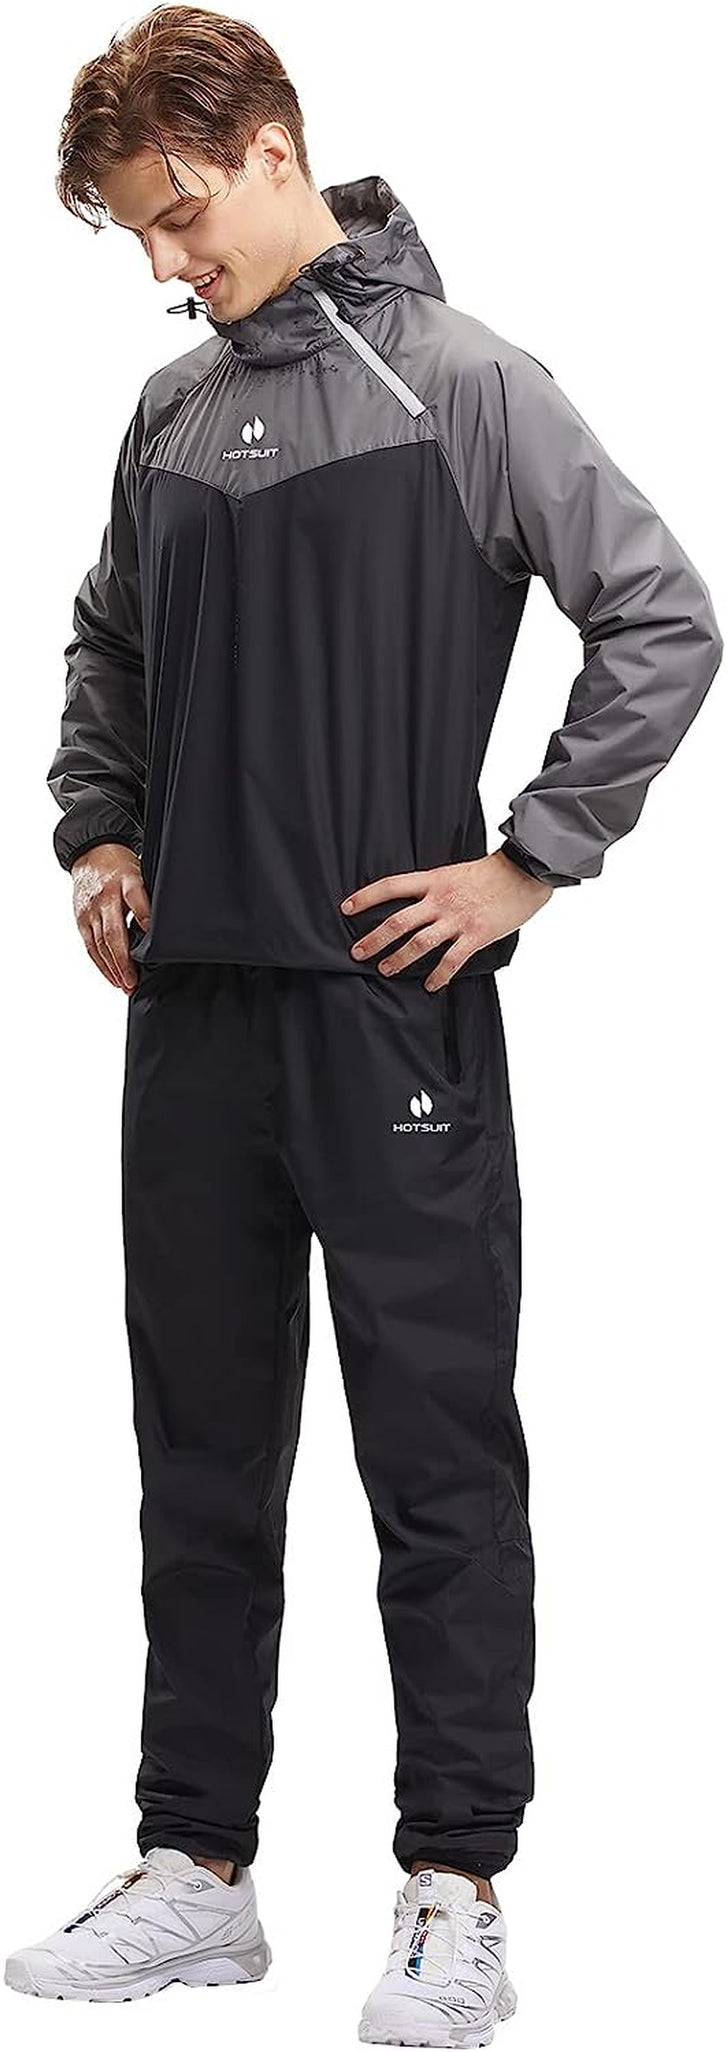 Sauna Suit for Men Sweat Sauna Jacket Pant Gym Workout Sweat Suits